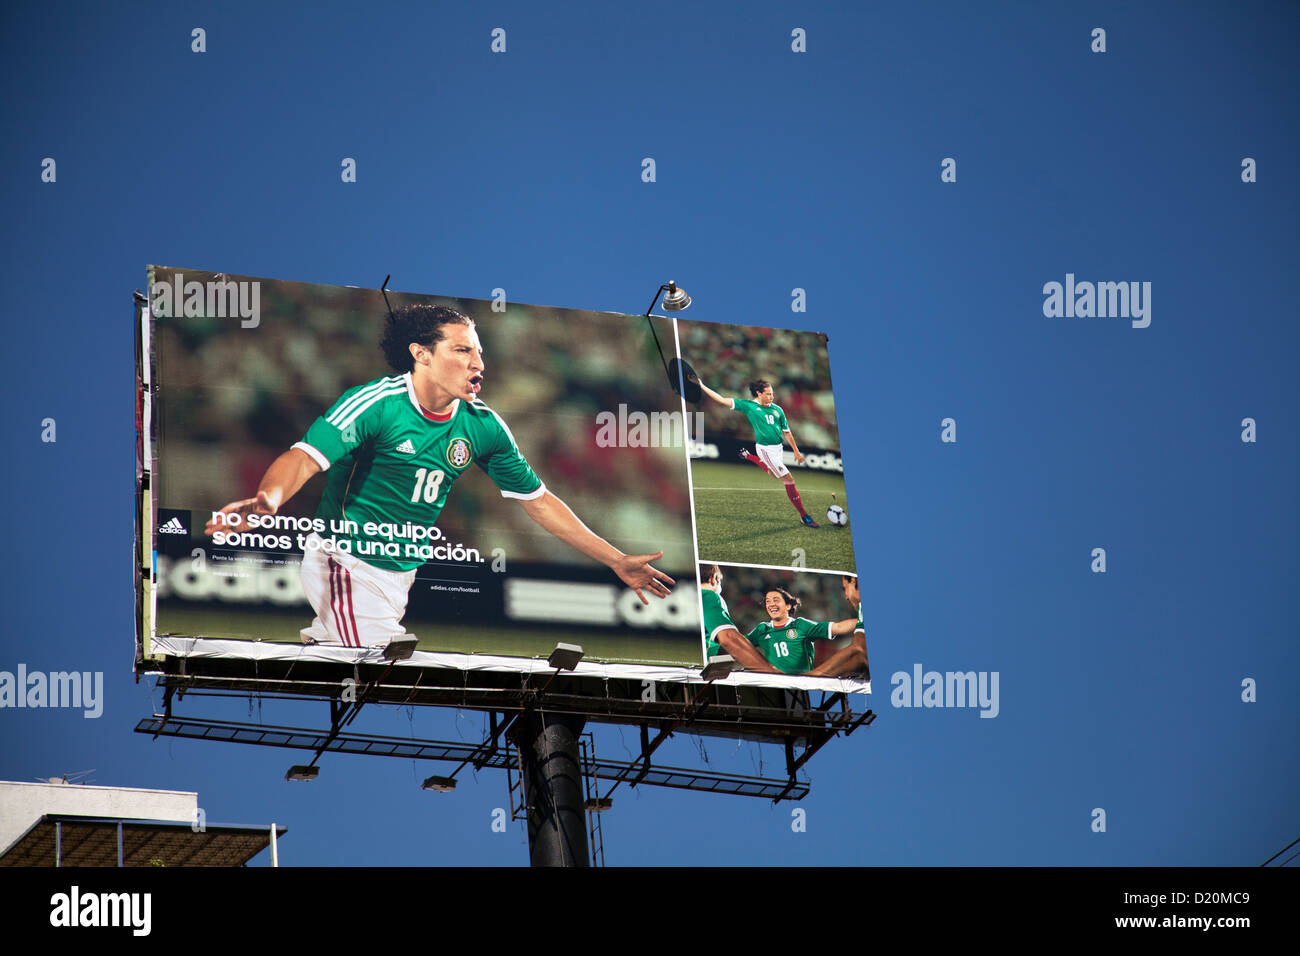 Adidas Billboard with Andres Guardado Footballer in Mexico Stock Photo